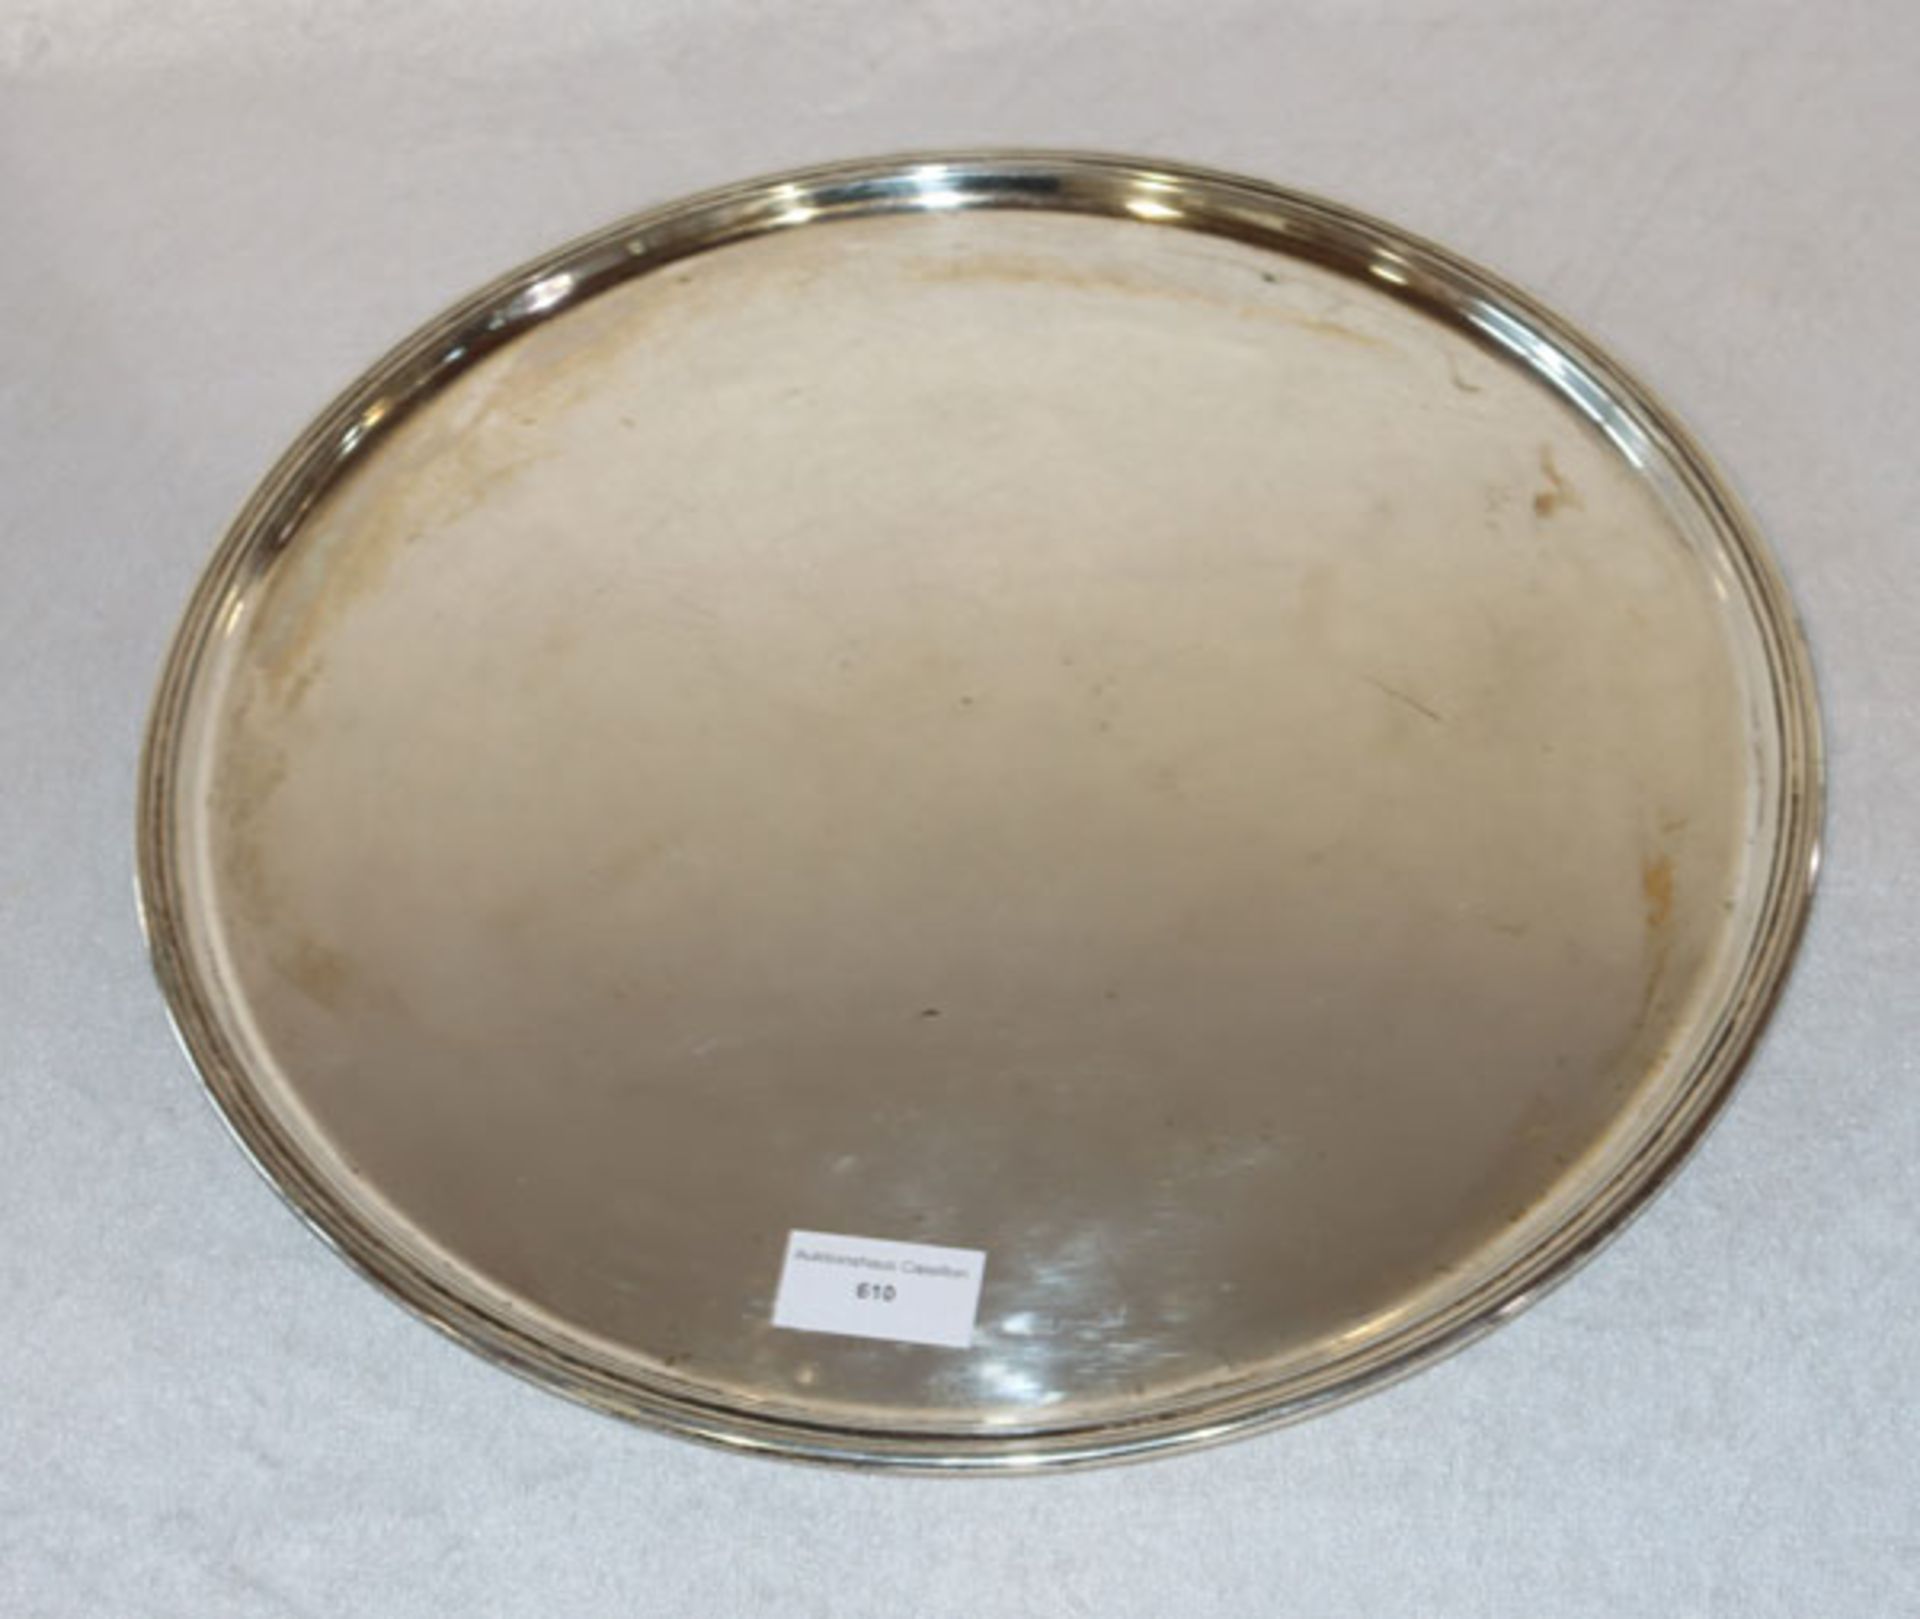 Rundes Tablett, 800 Silber, 1100 gr., D 36 cm, Gebrauchsspuren